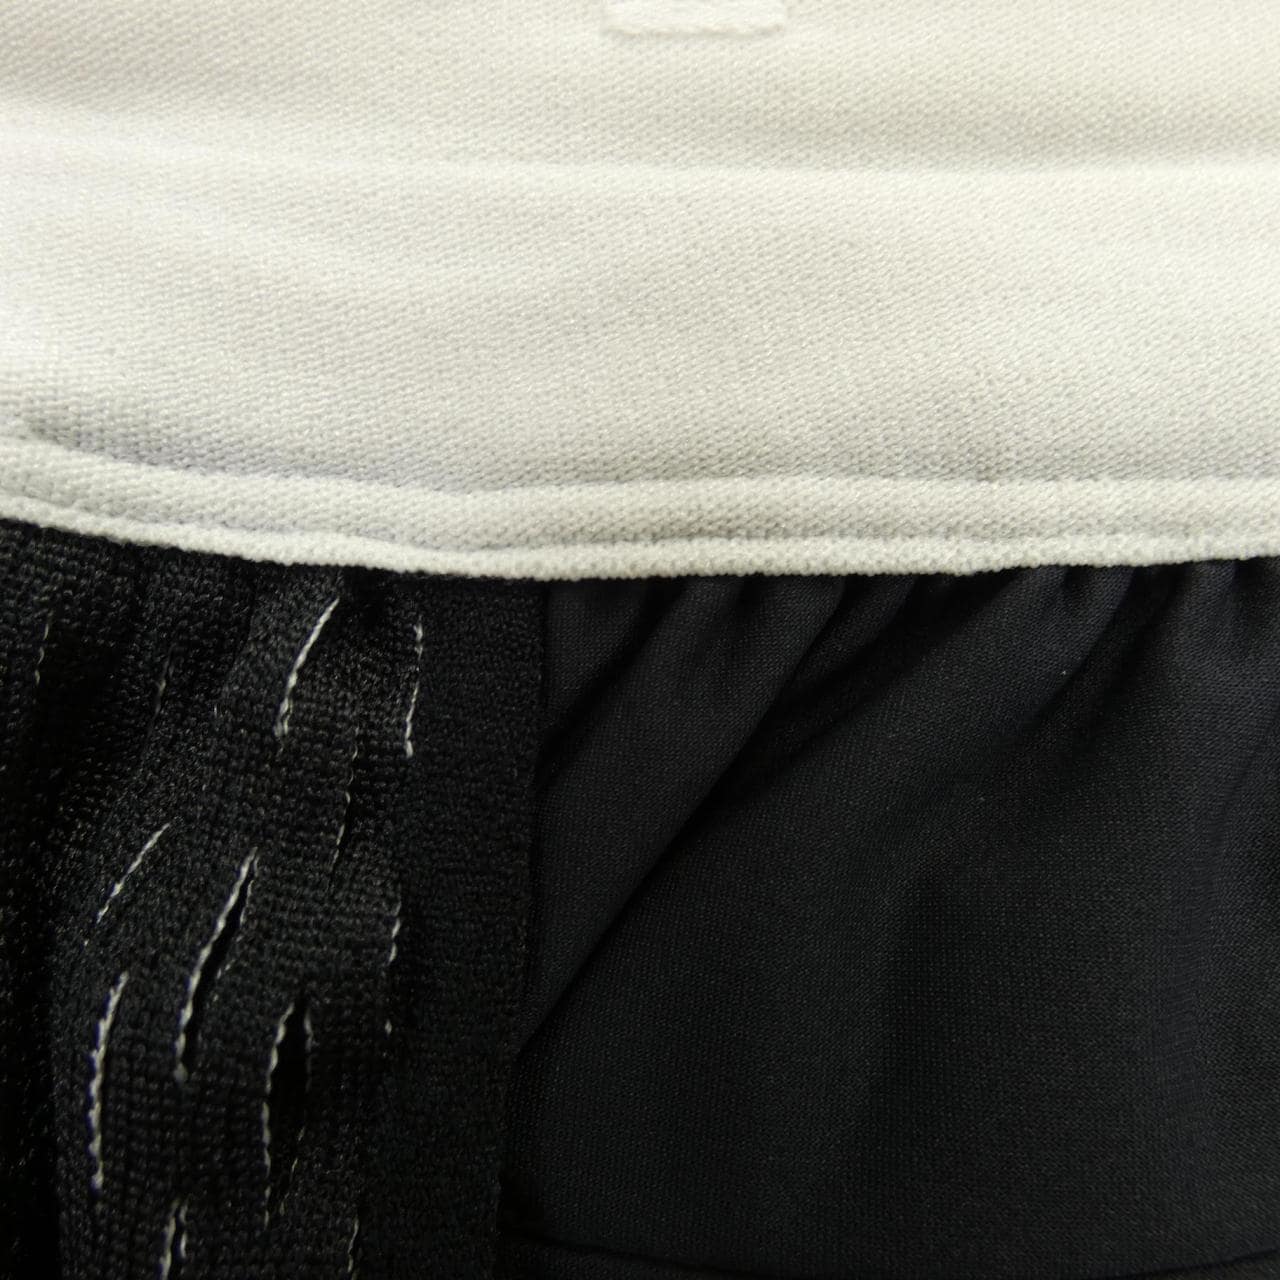 Nike NIKE shorts